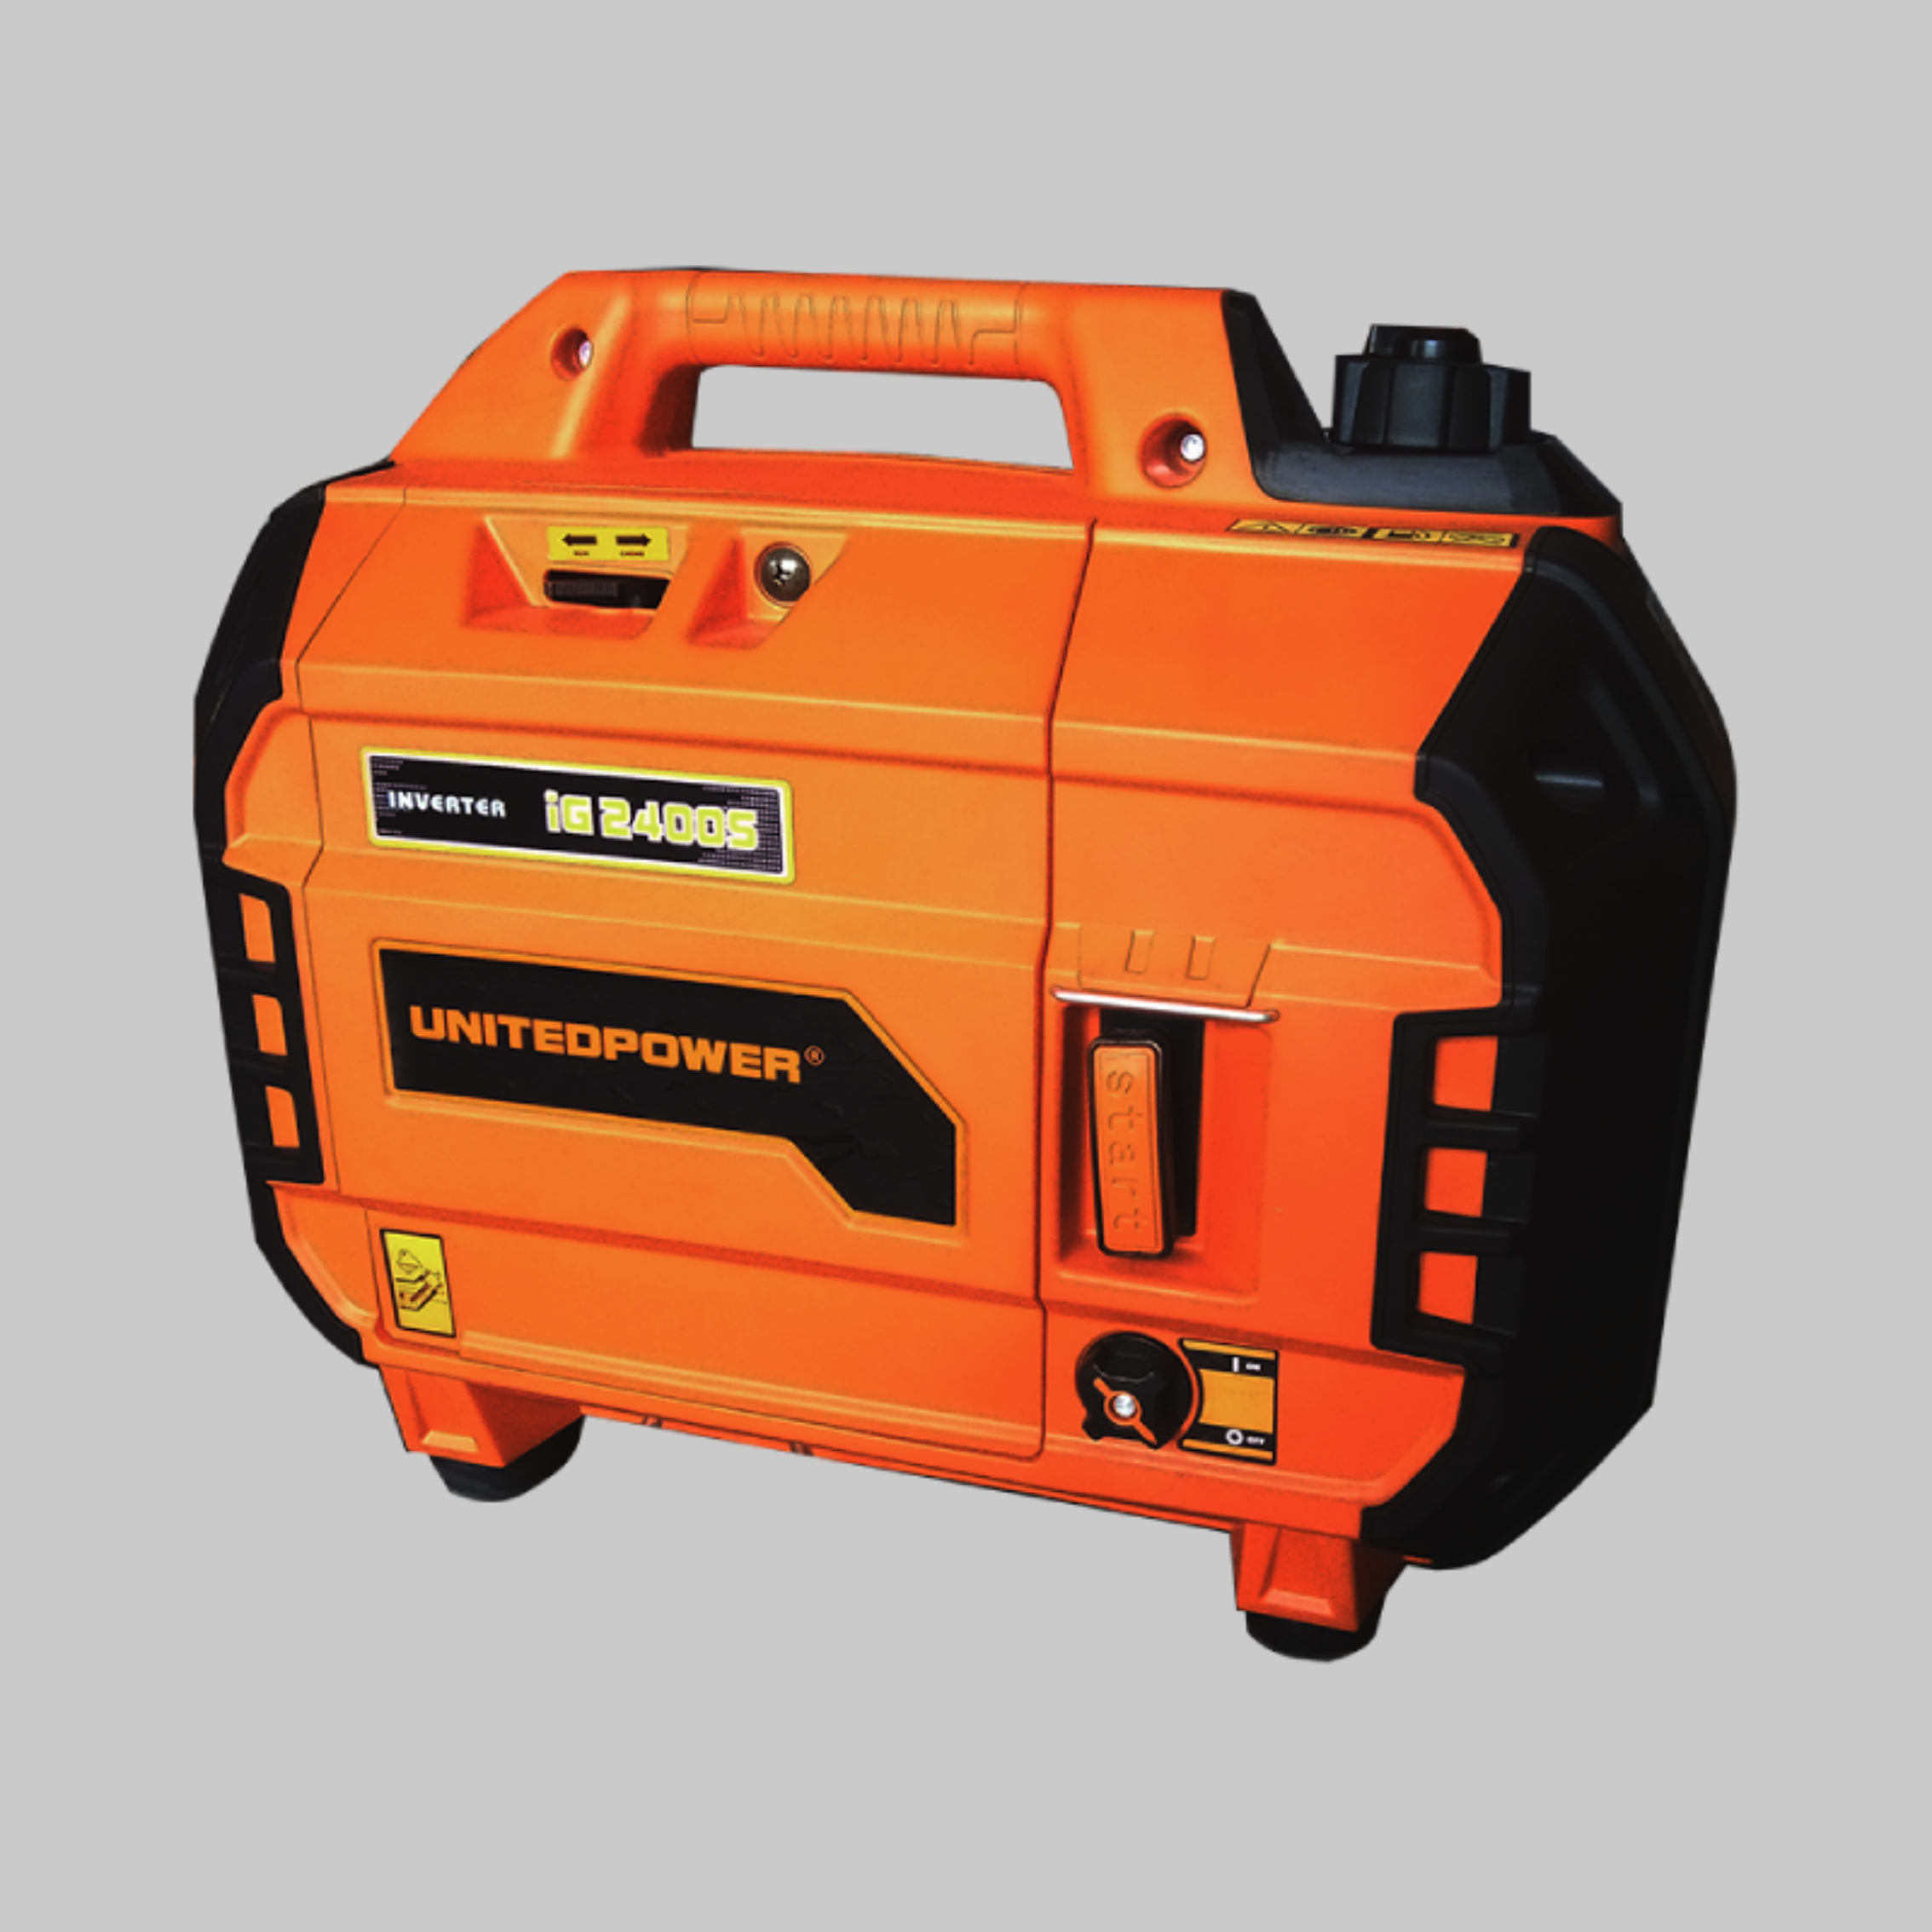 United Power Generator – Inverter Series 2.0KW (IG2400S)